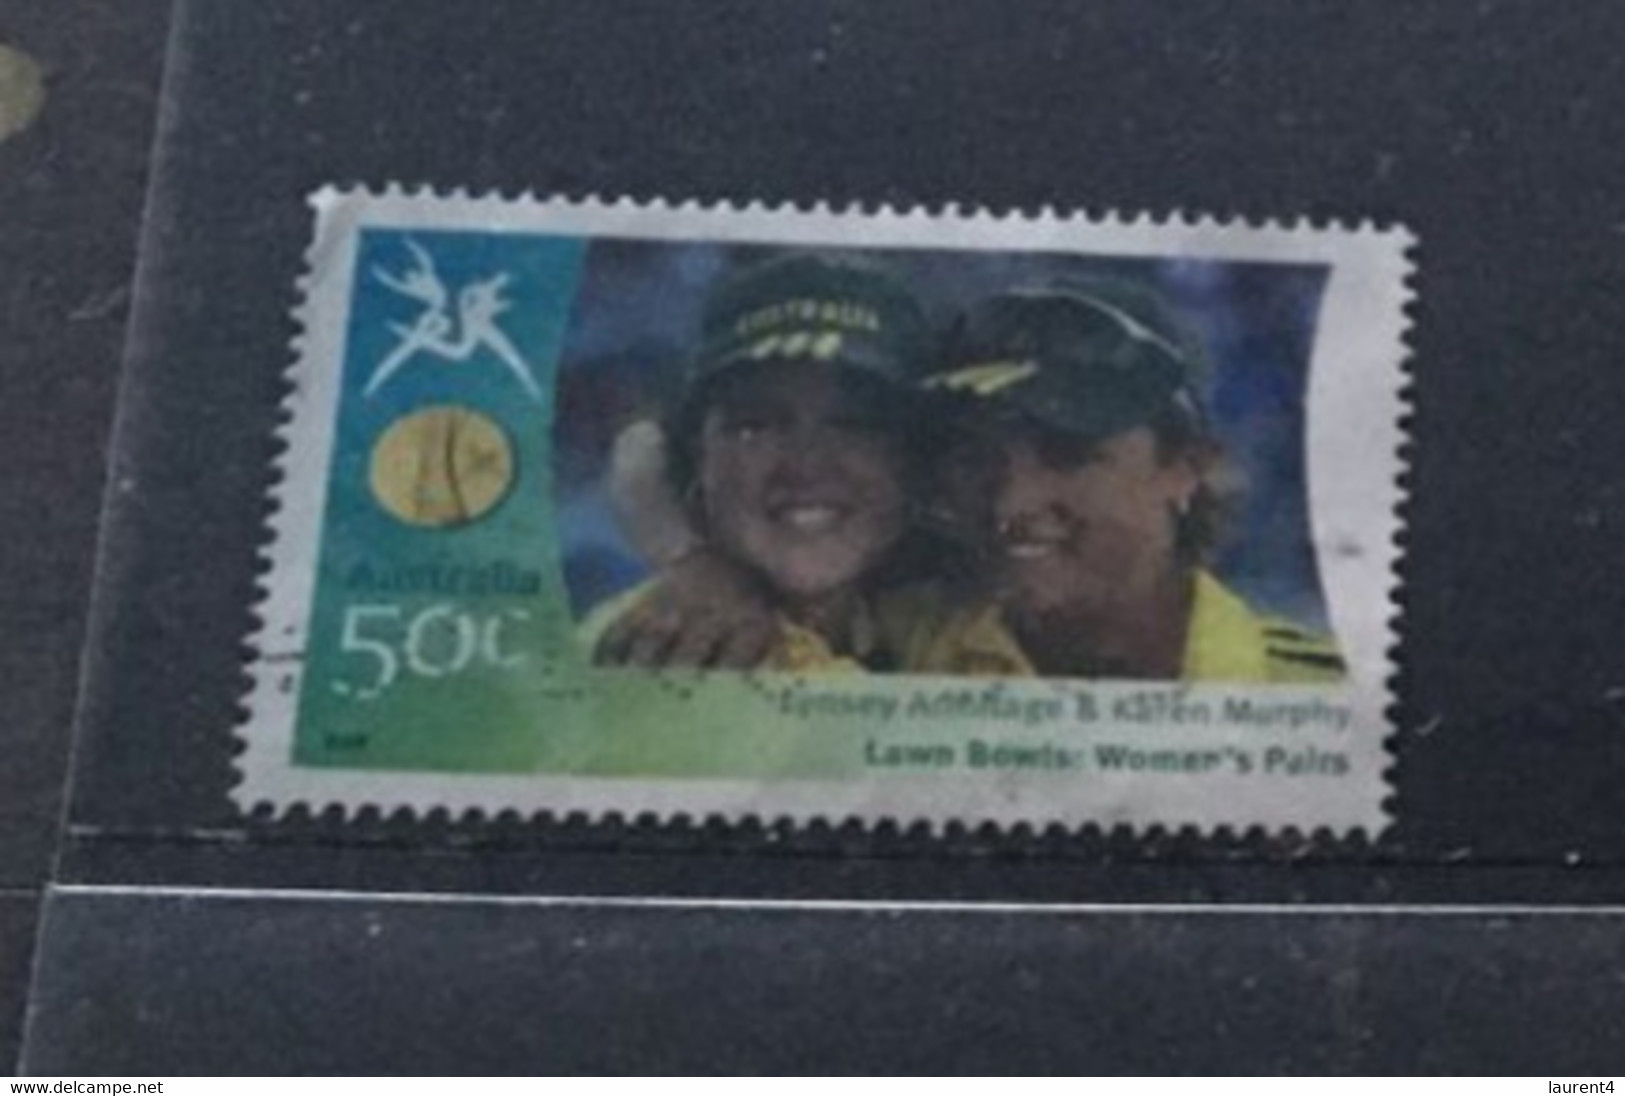 (stamp 17-7-2021) Australia Use Stamp (scarce) - Melbourne Commonweatlh Games Gold Medalist - Lawn Bowls - Pétanque